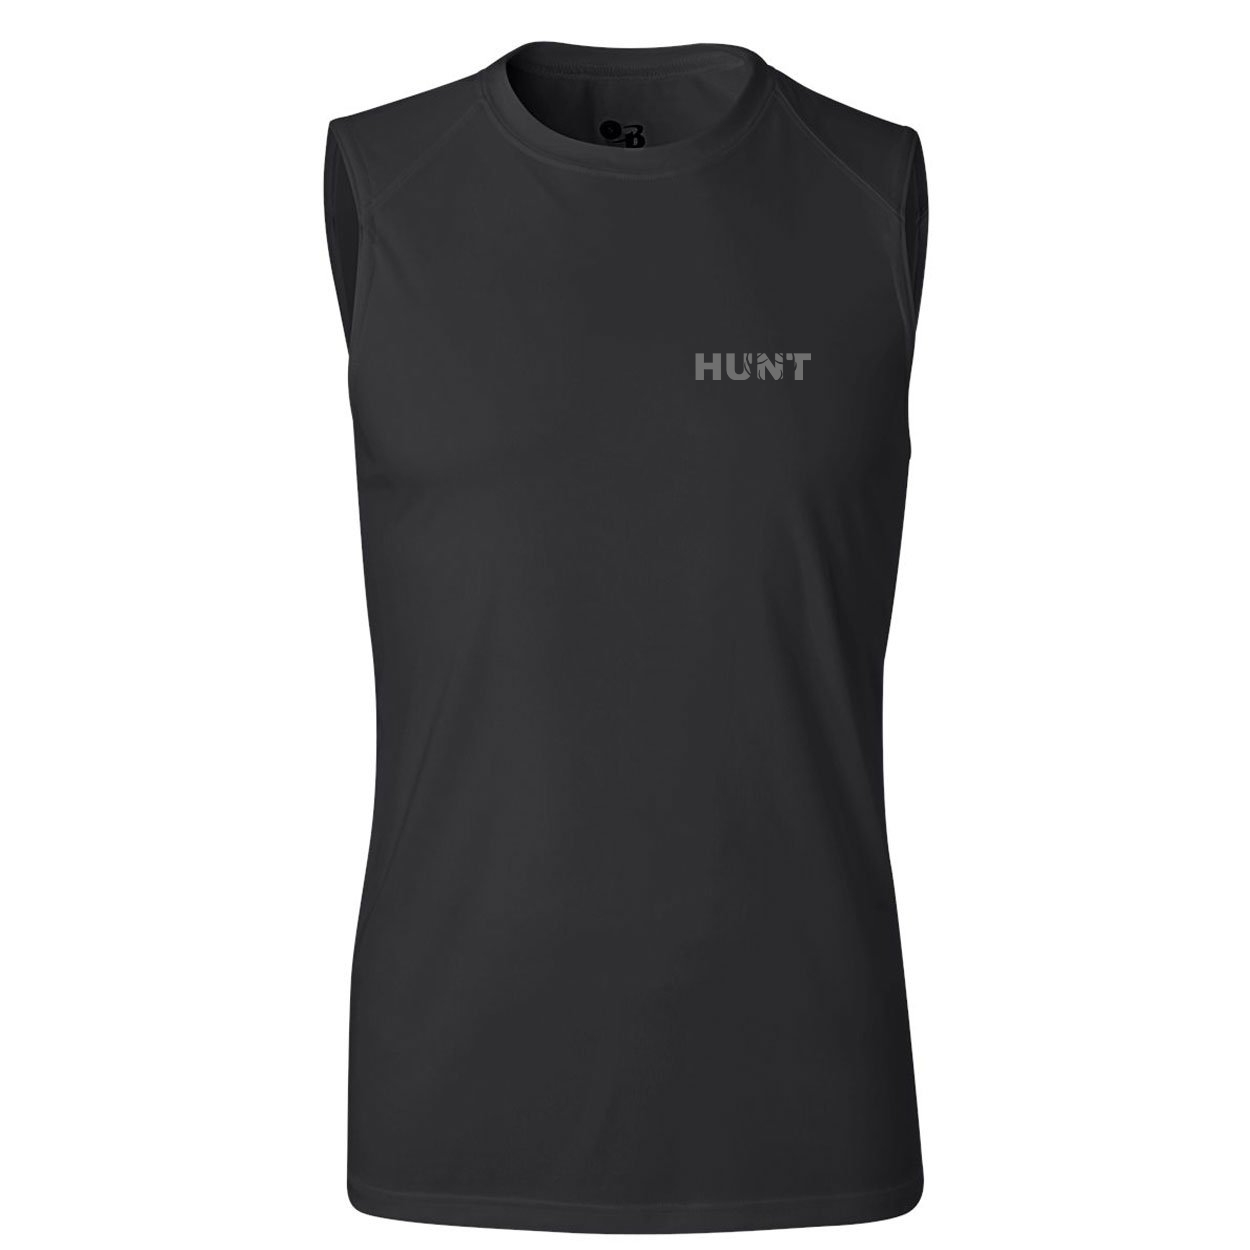 Hunt Rack Logo Night Out Unisex Performance Sleeveless T-Shirt Black (Gray Logo)